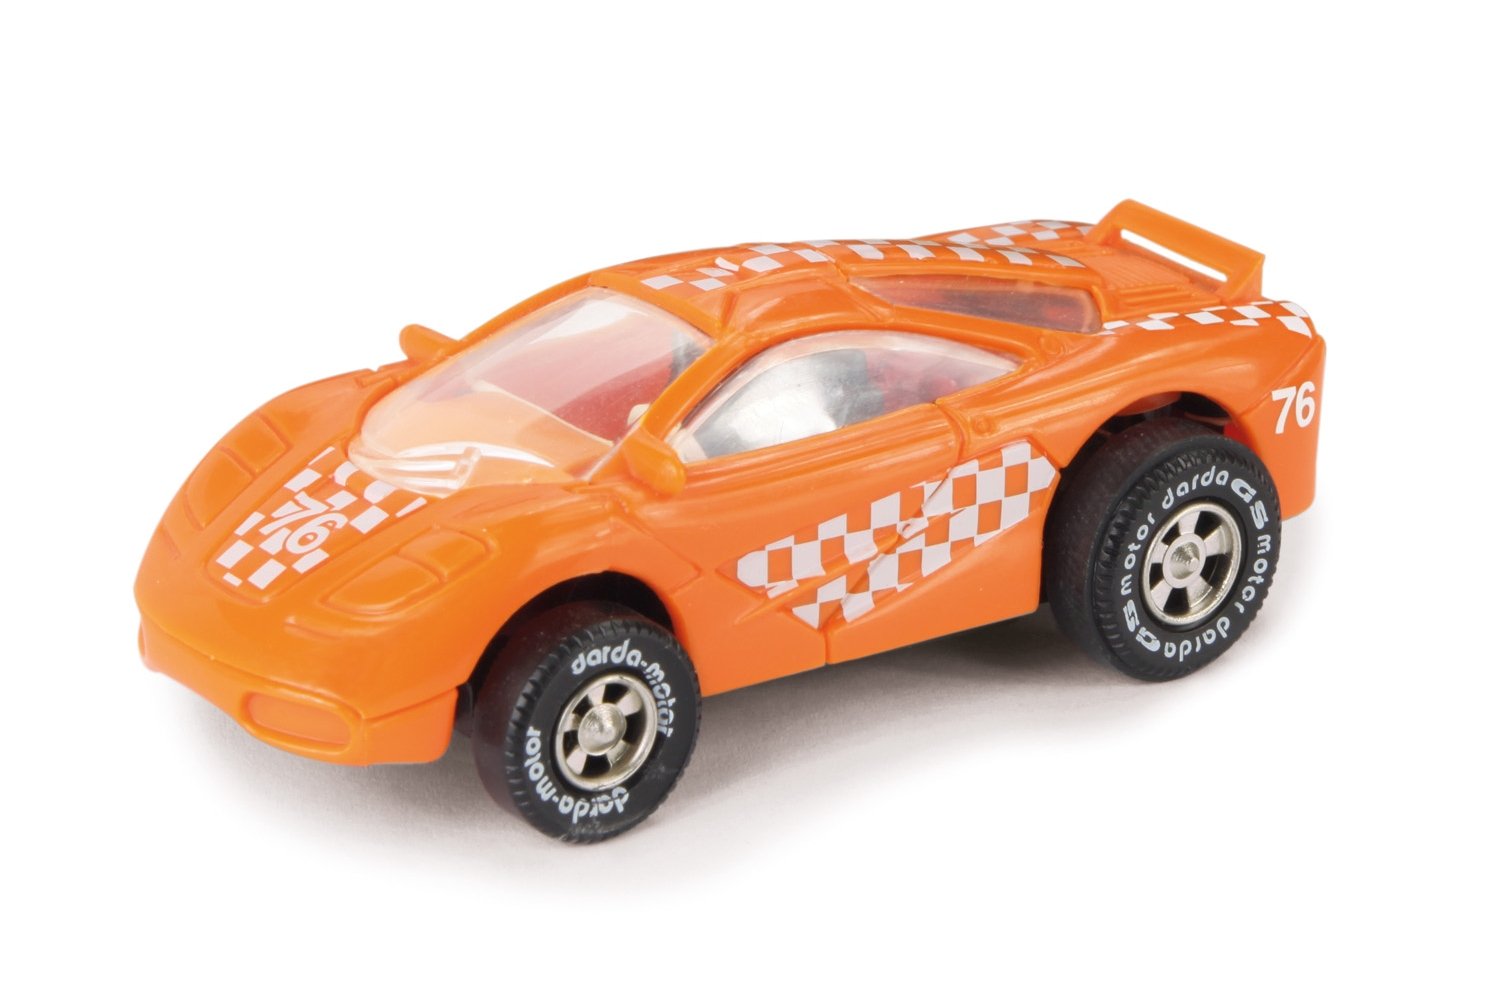 Darda Toy Racing Car